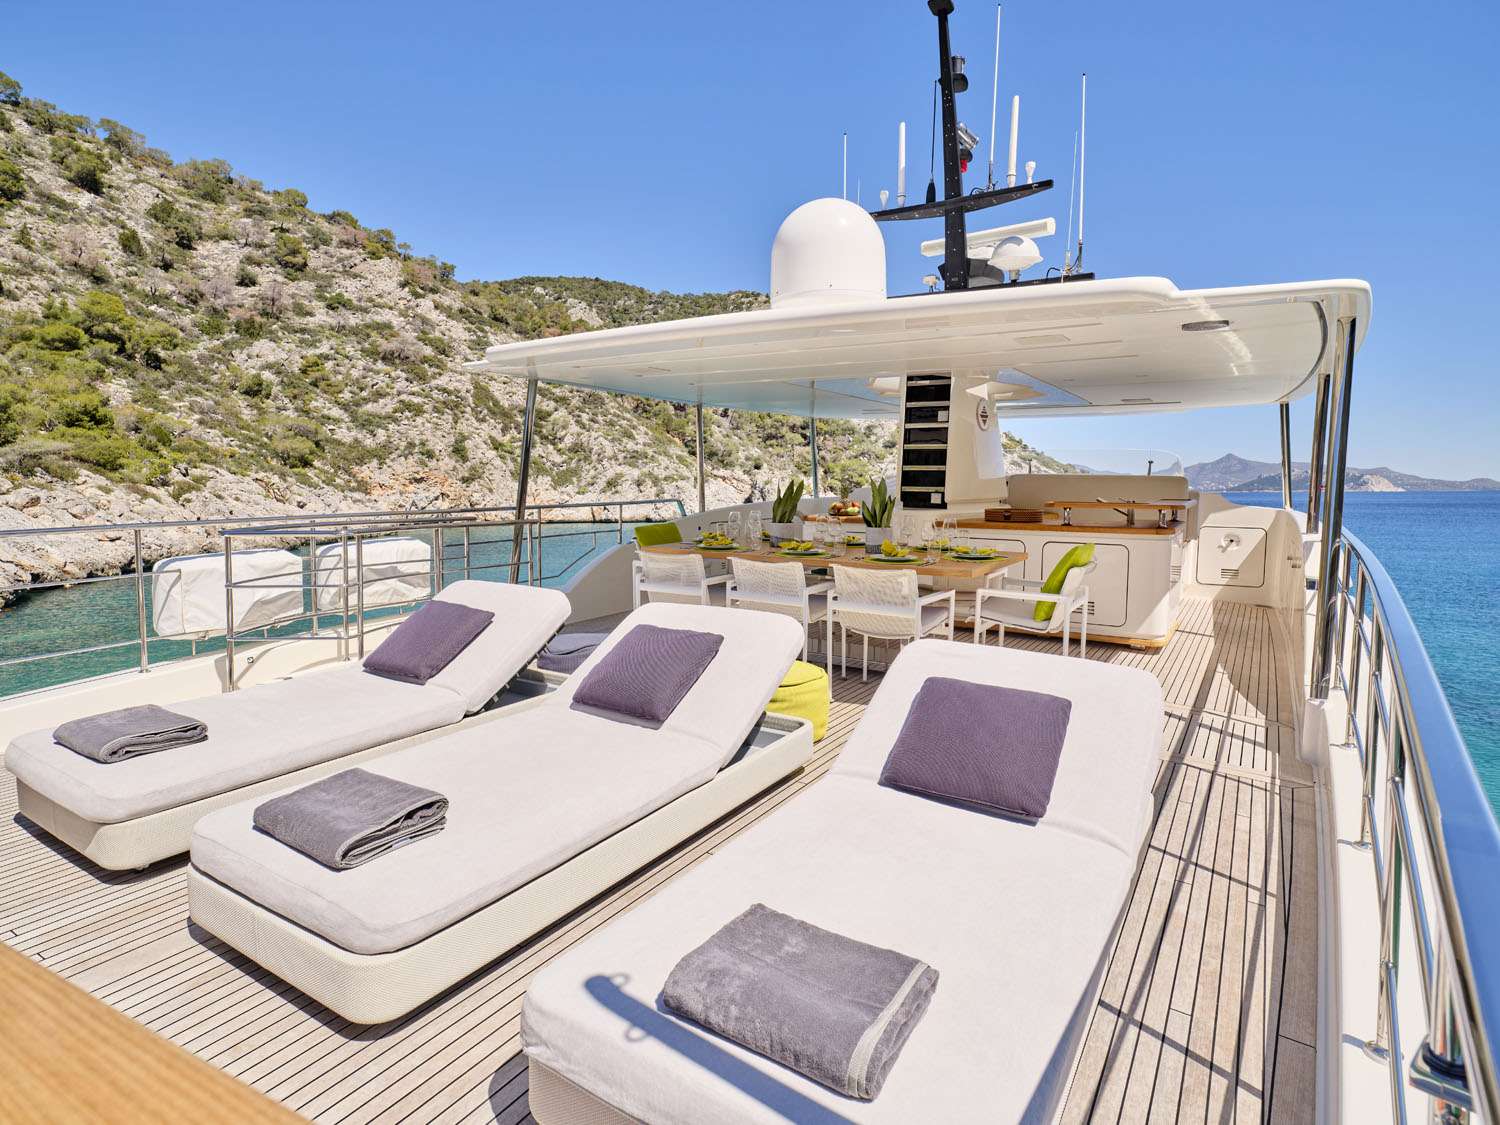 FLOR Yacht Charter - Sun Deck Lounge Area